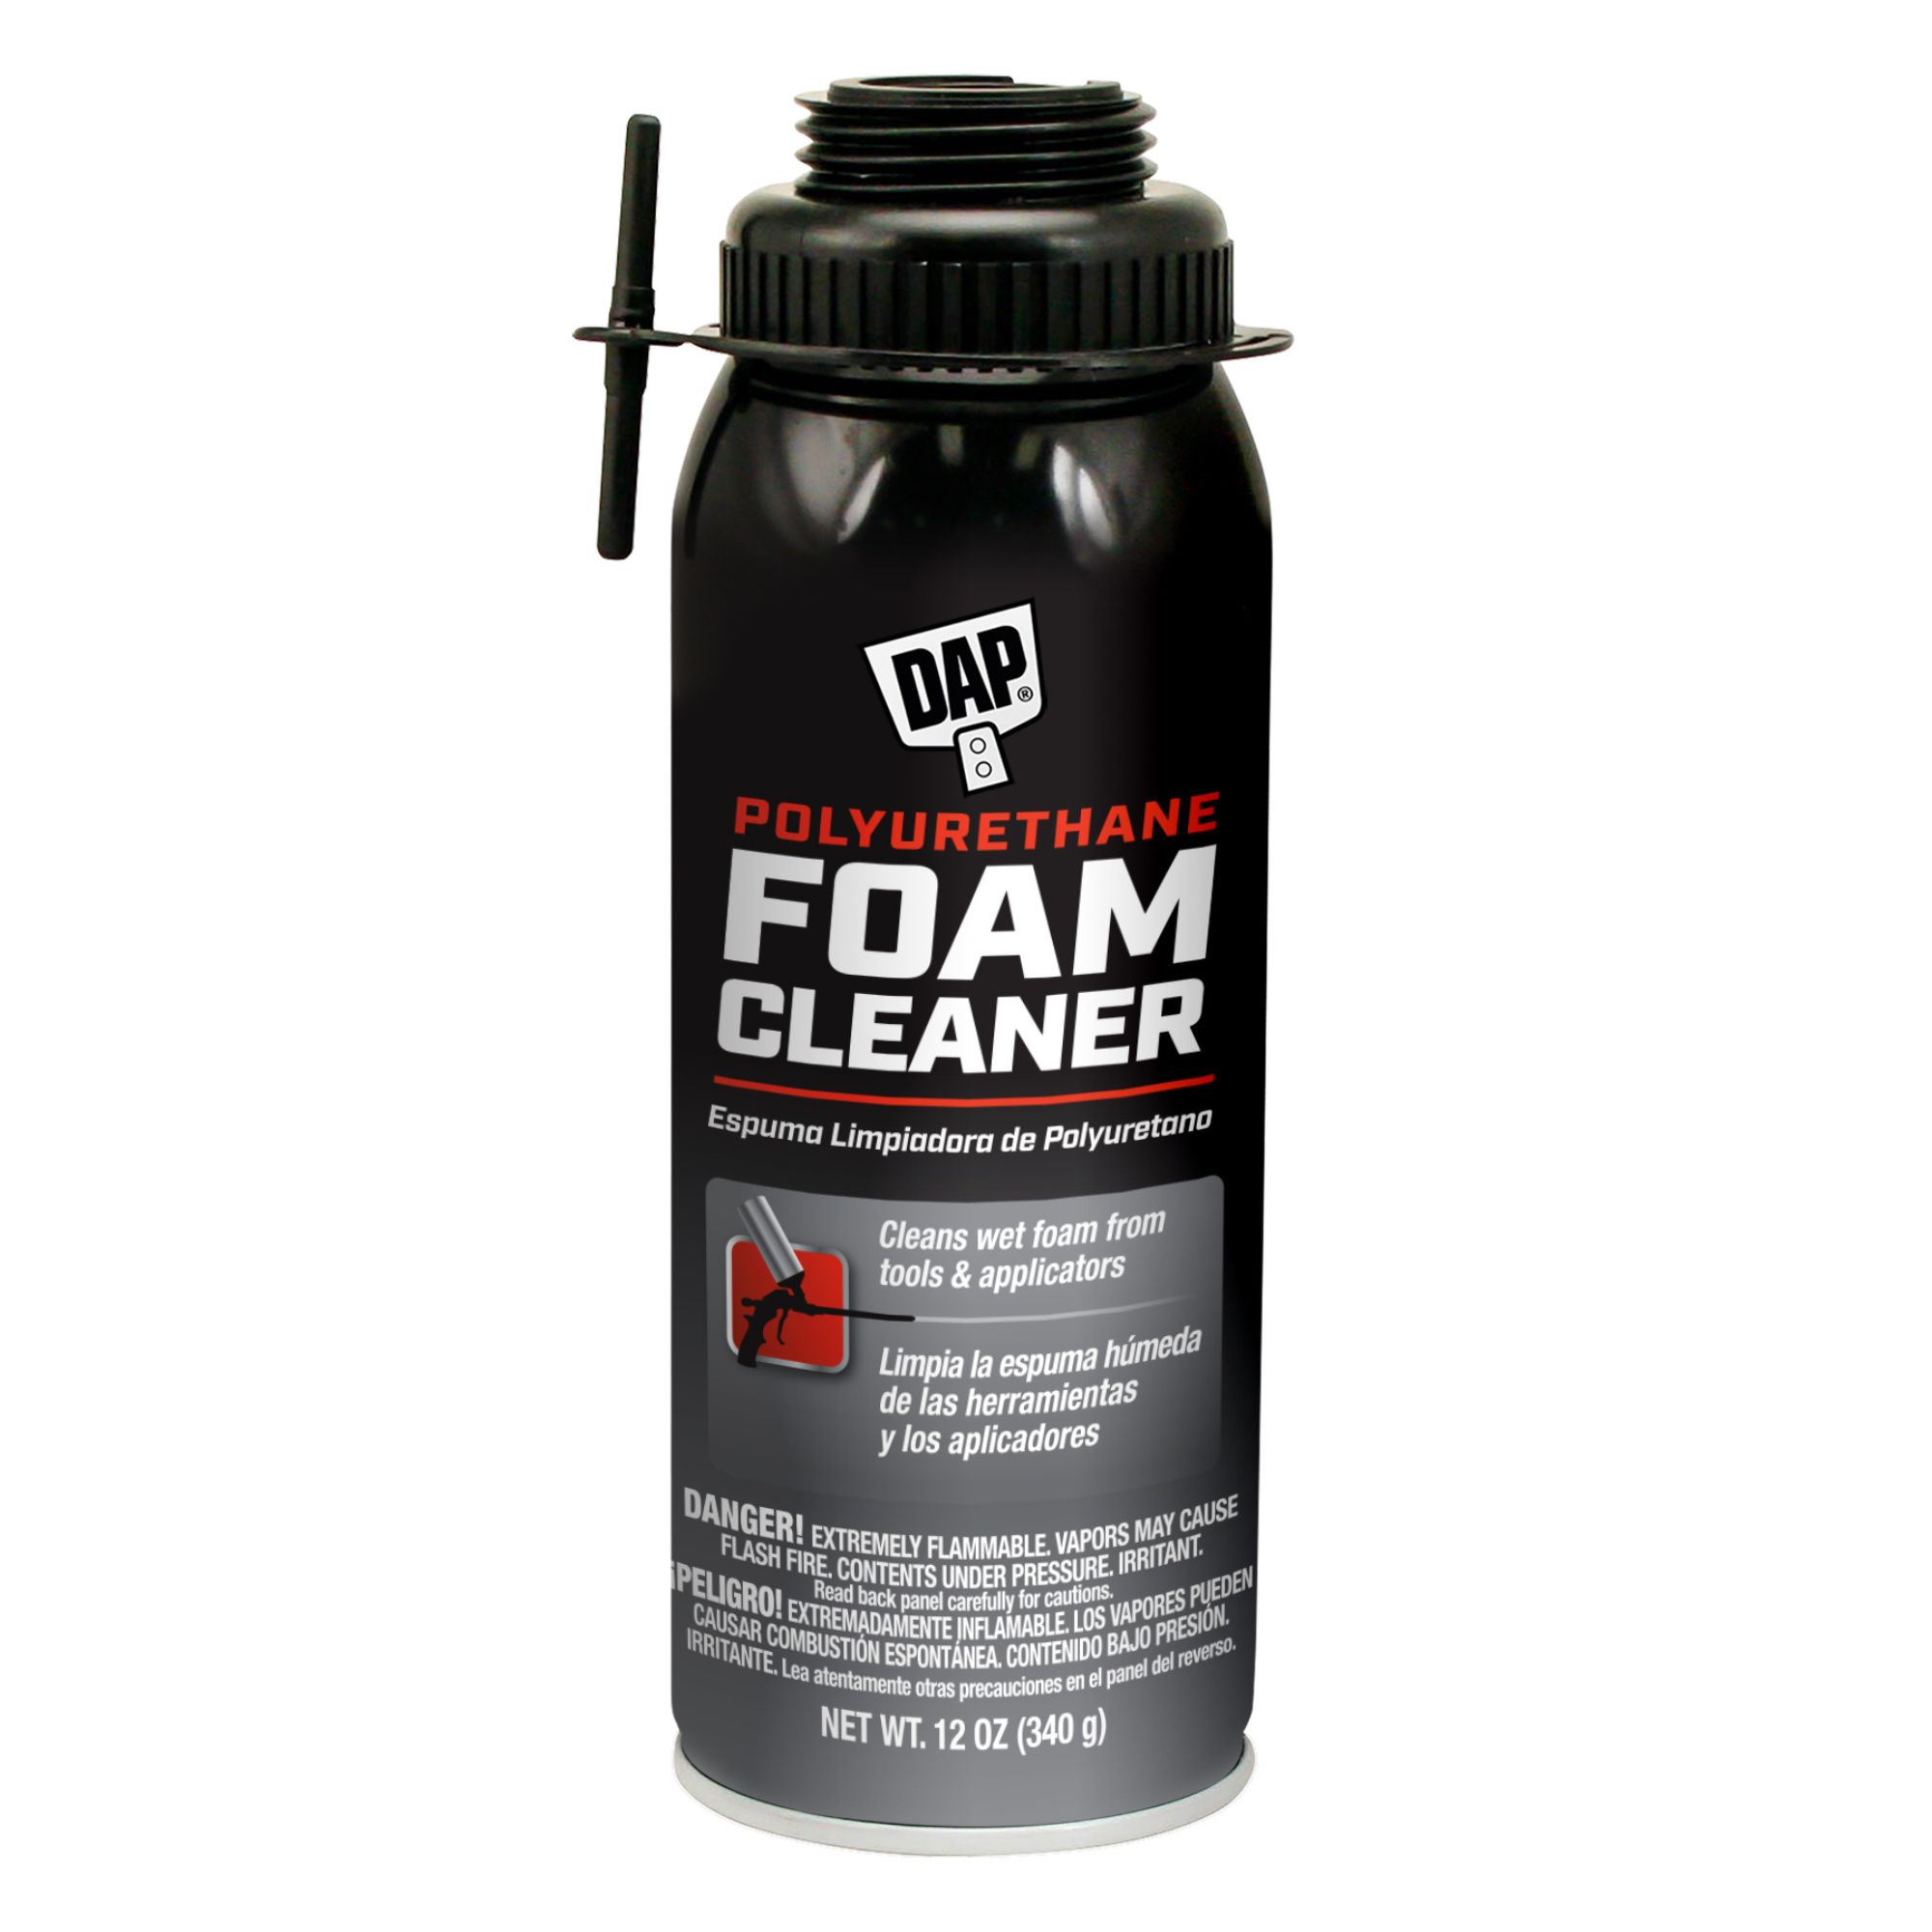 DAP Polyurethane Foam Cleaner